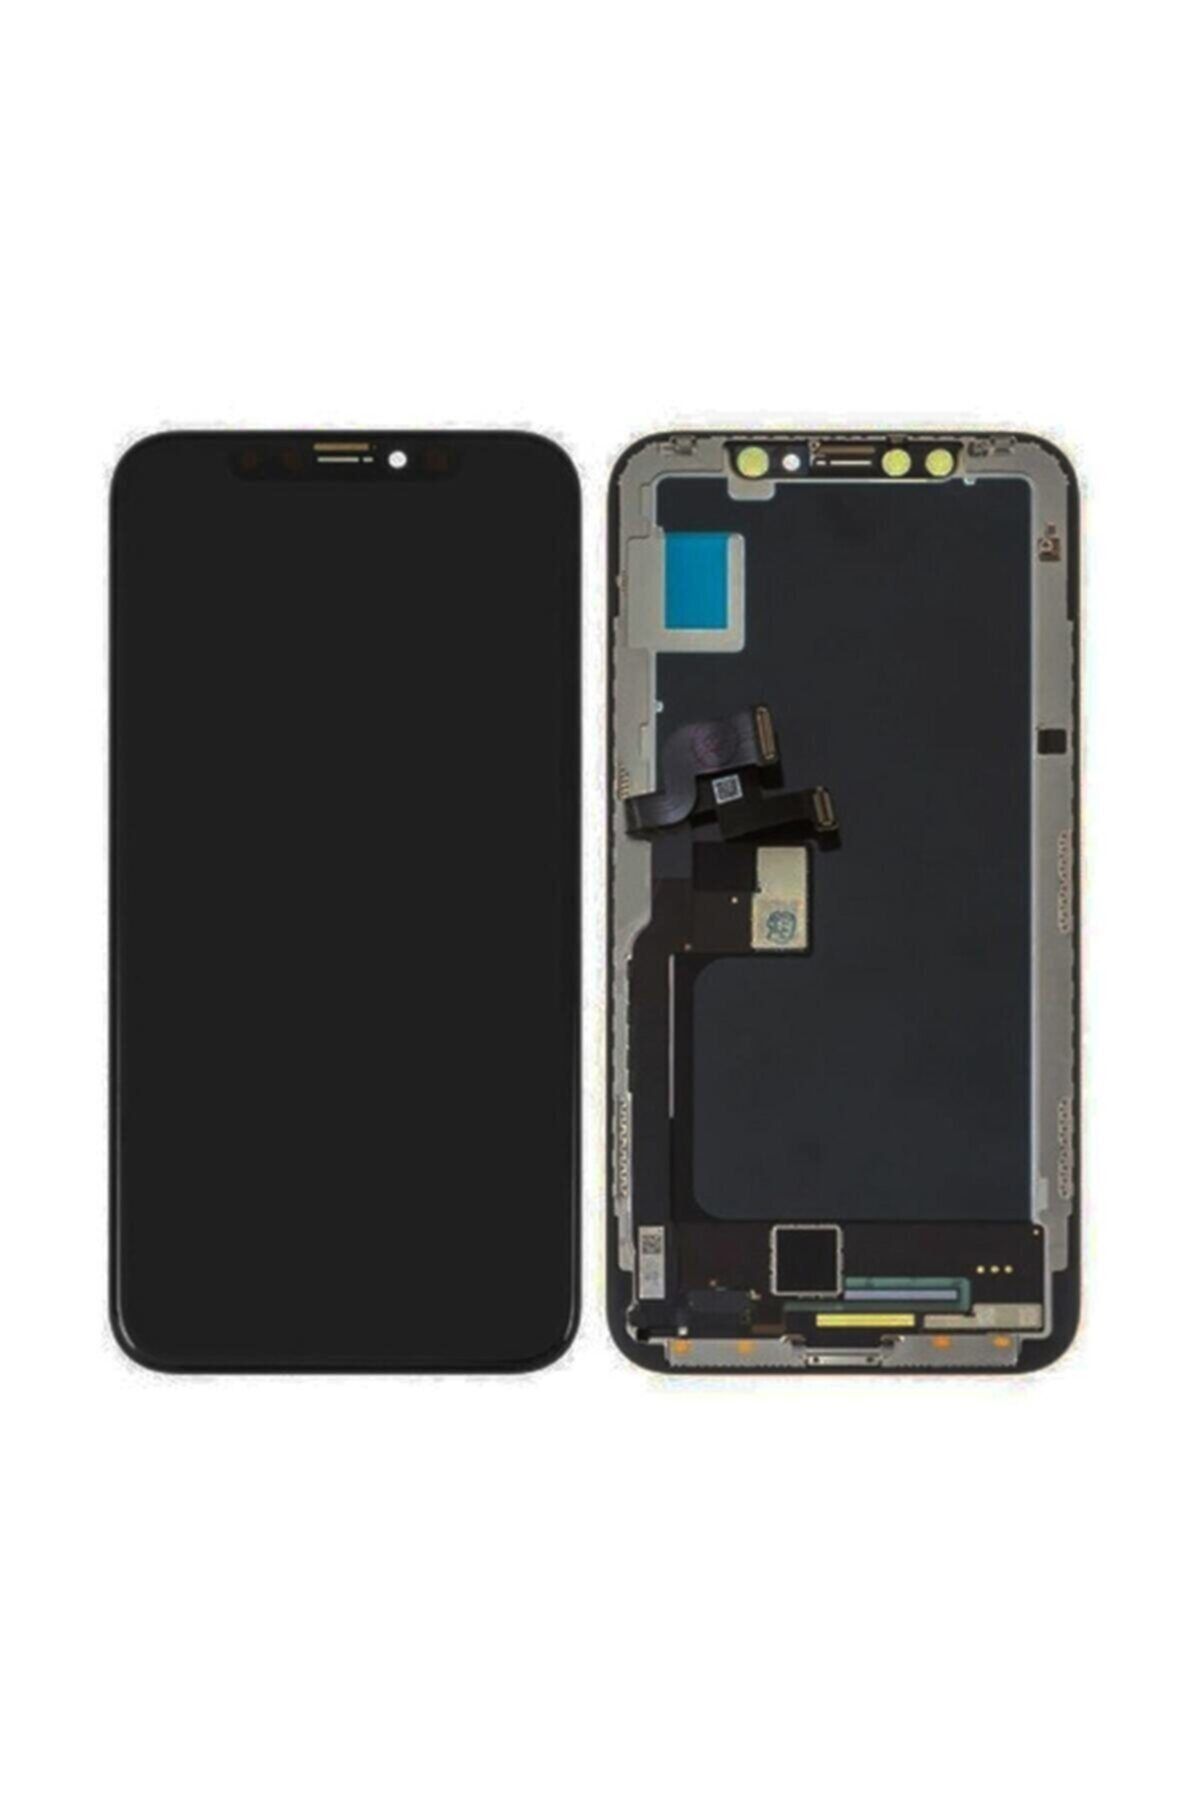 Genel Markalar Iphone X Uyumlu Siyah Oled Lcd Ekran Ve Dokunmatik 100112